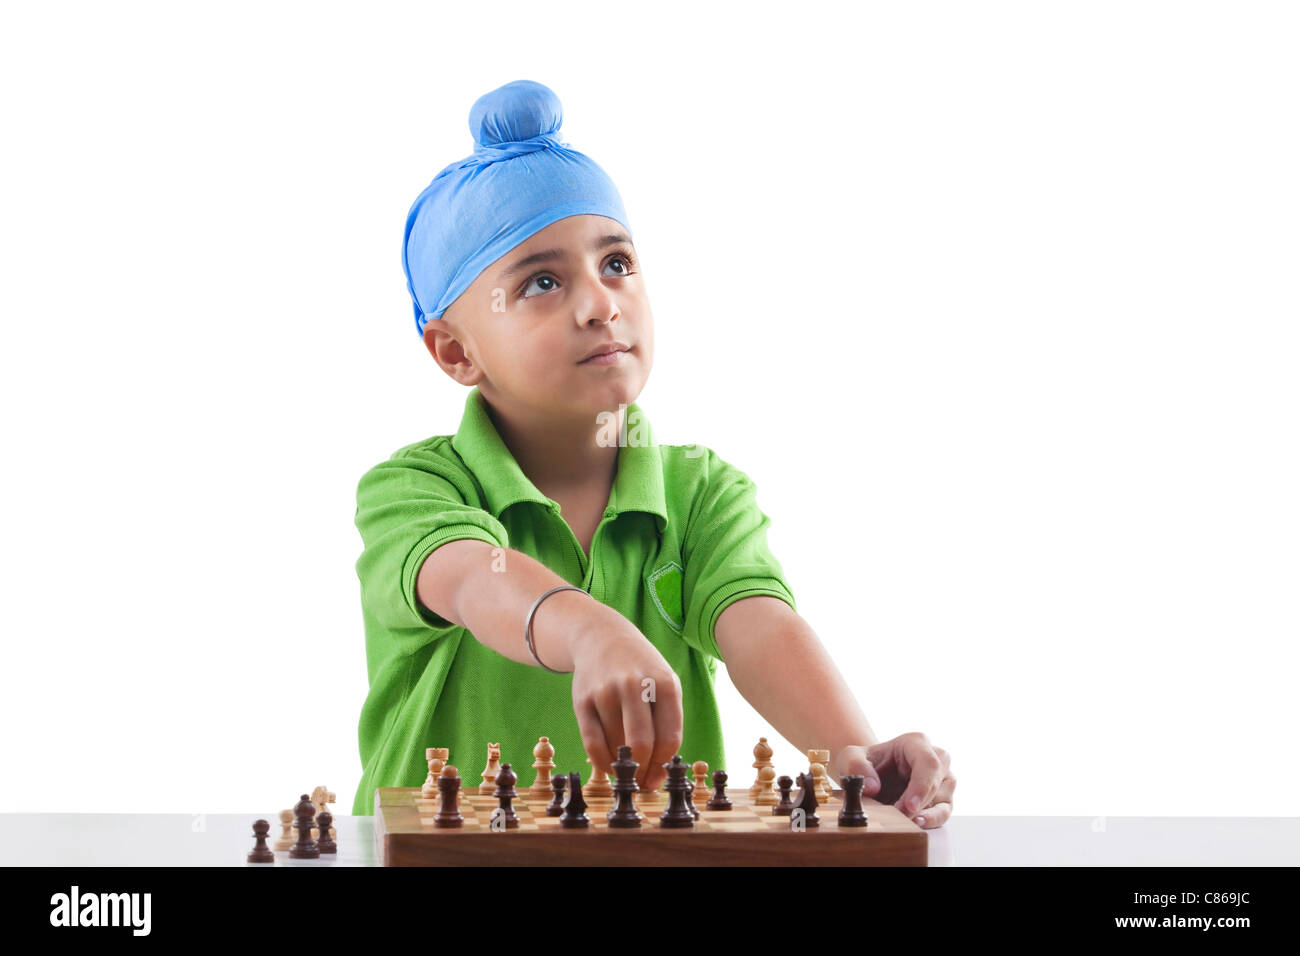 Sikh boy playing chess Stock Photo